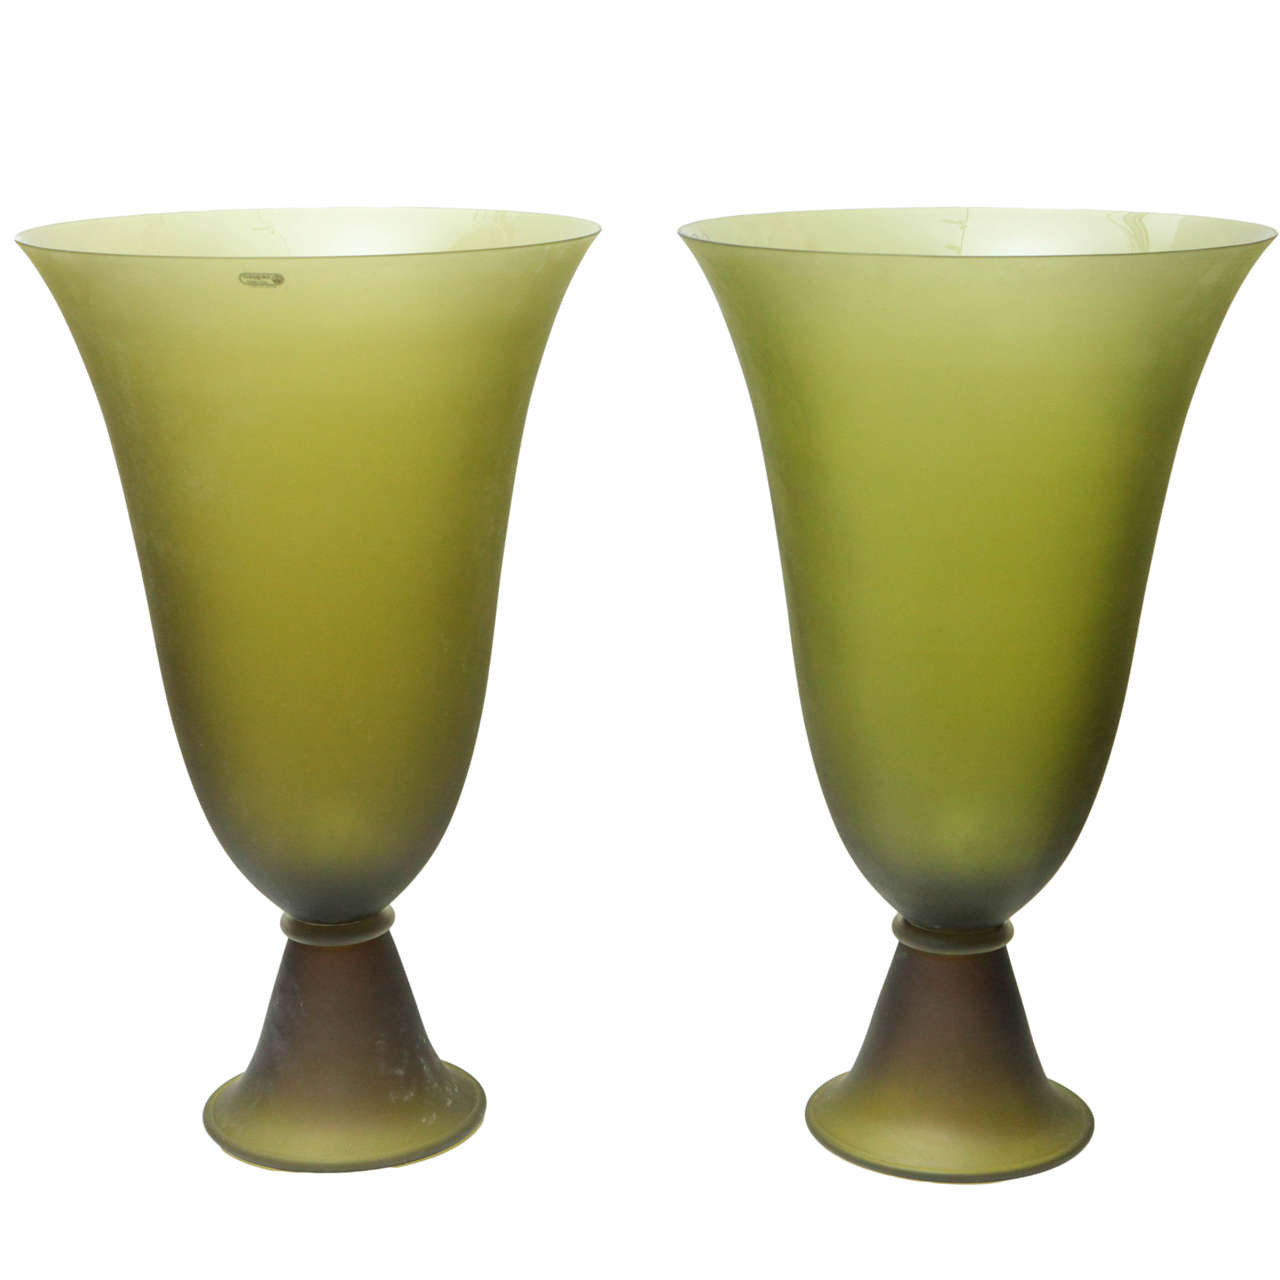 Pair of Seguso Apple Green Vases